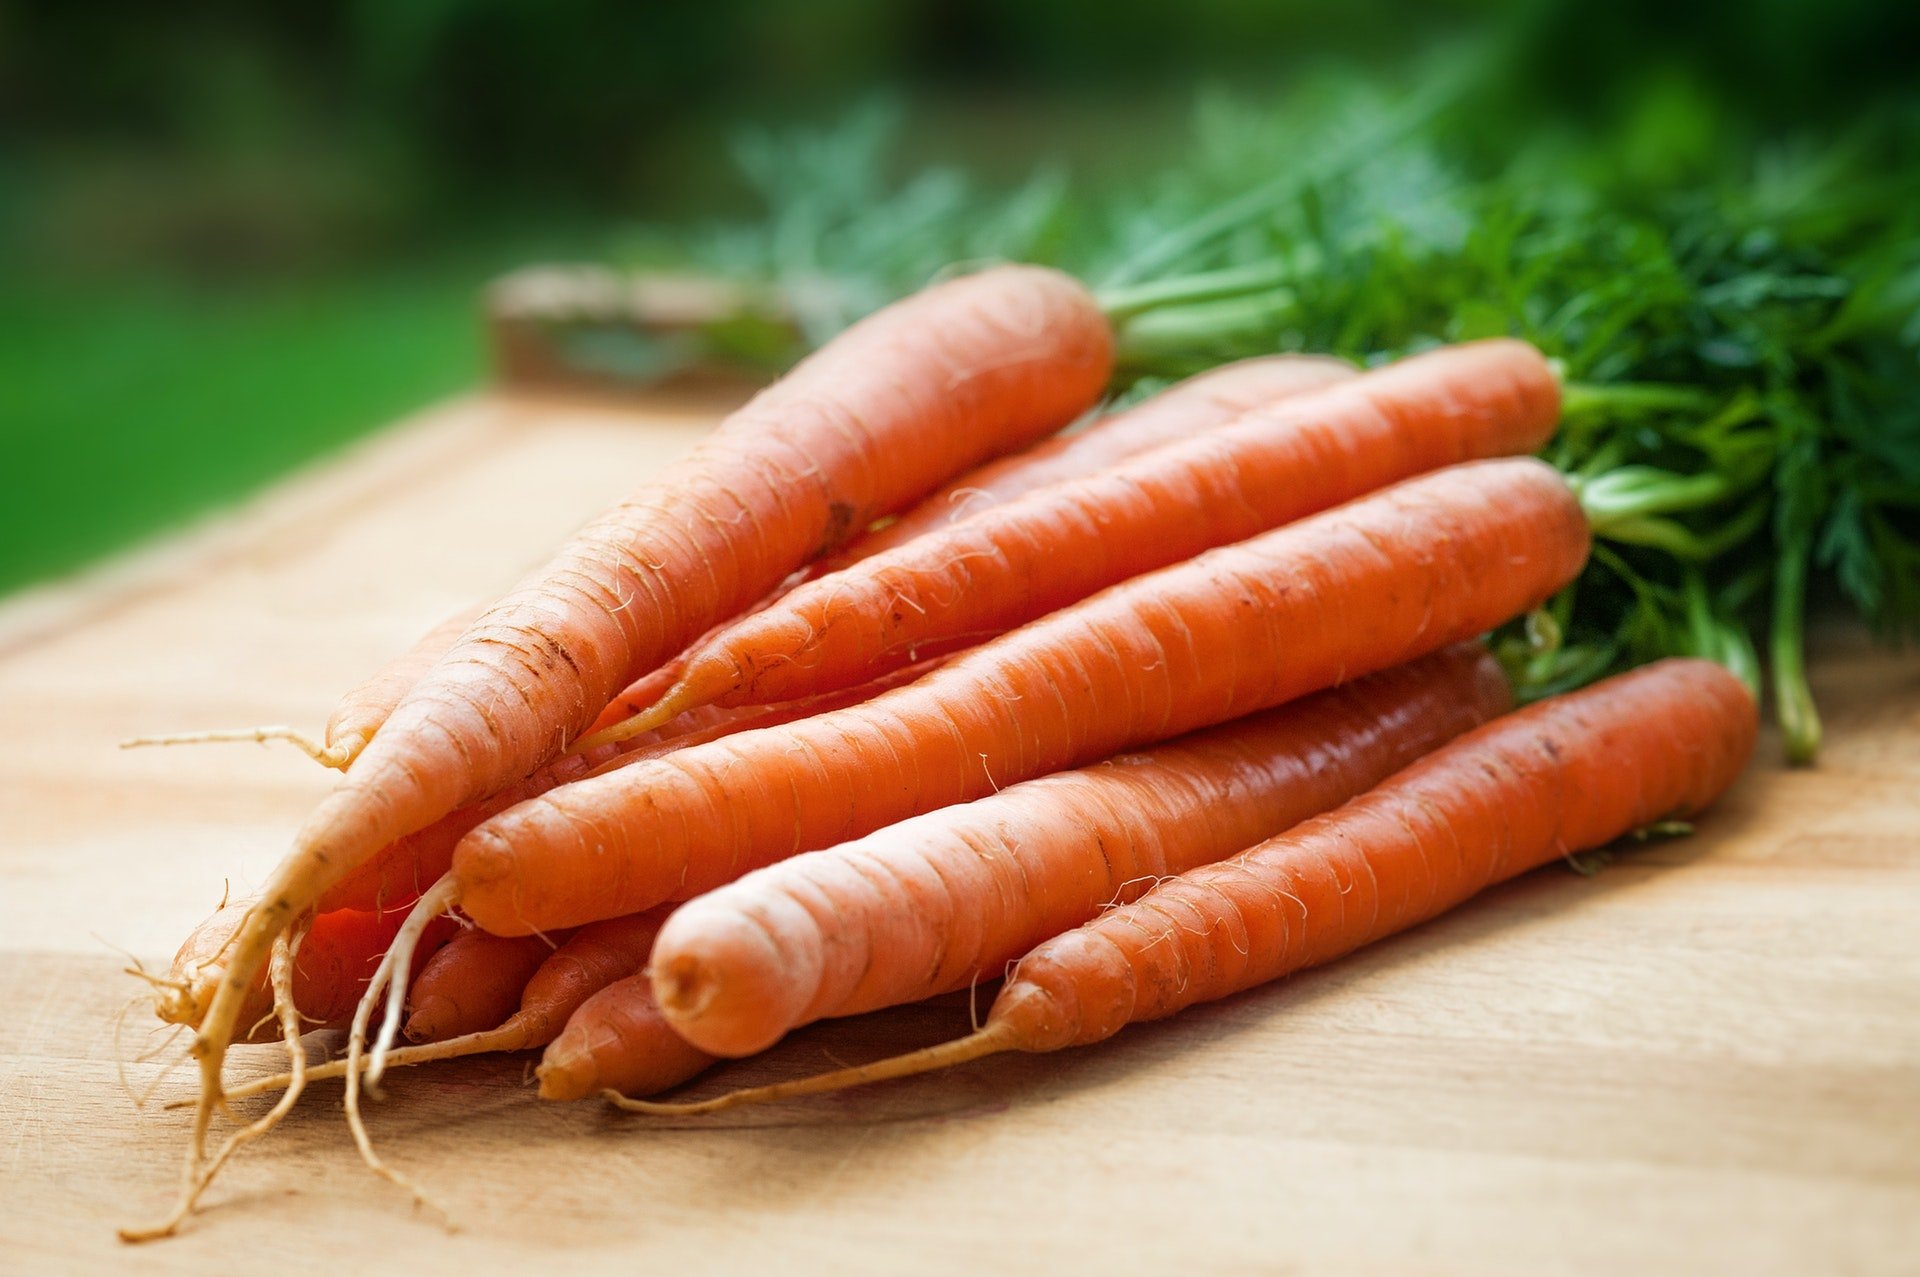 Xarope de cenoura como fazer